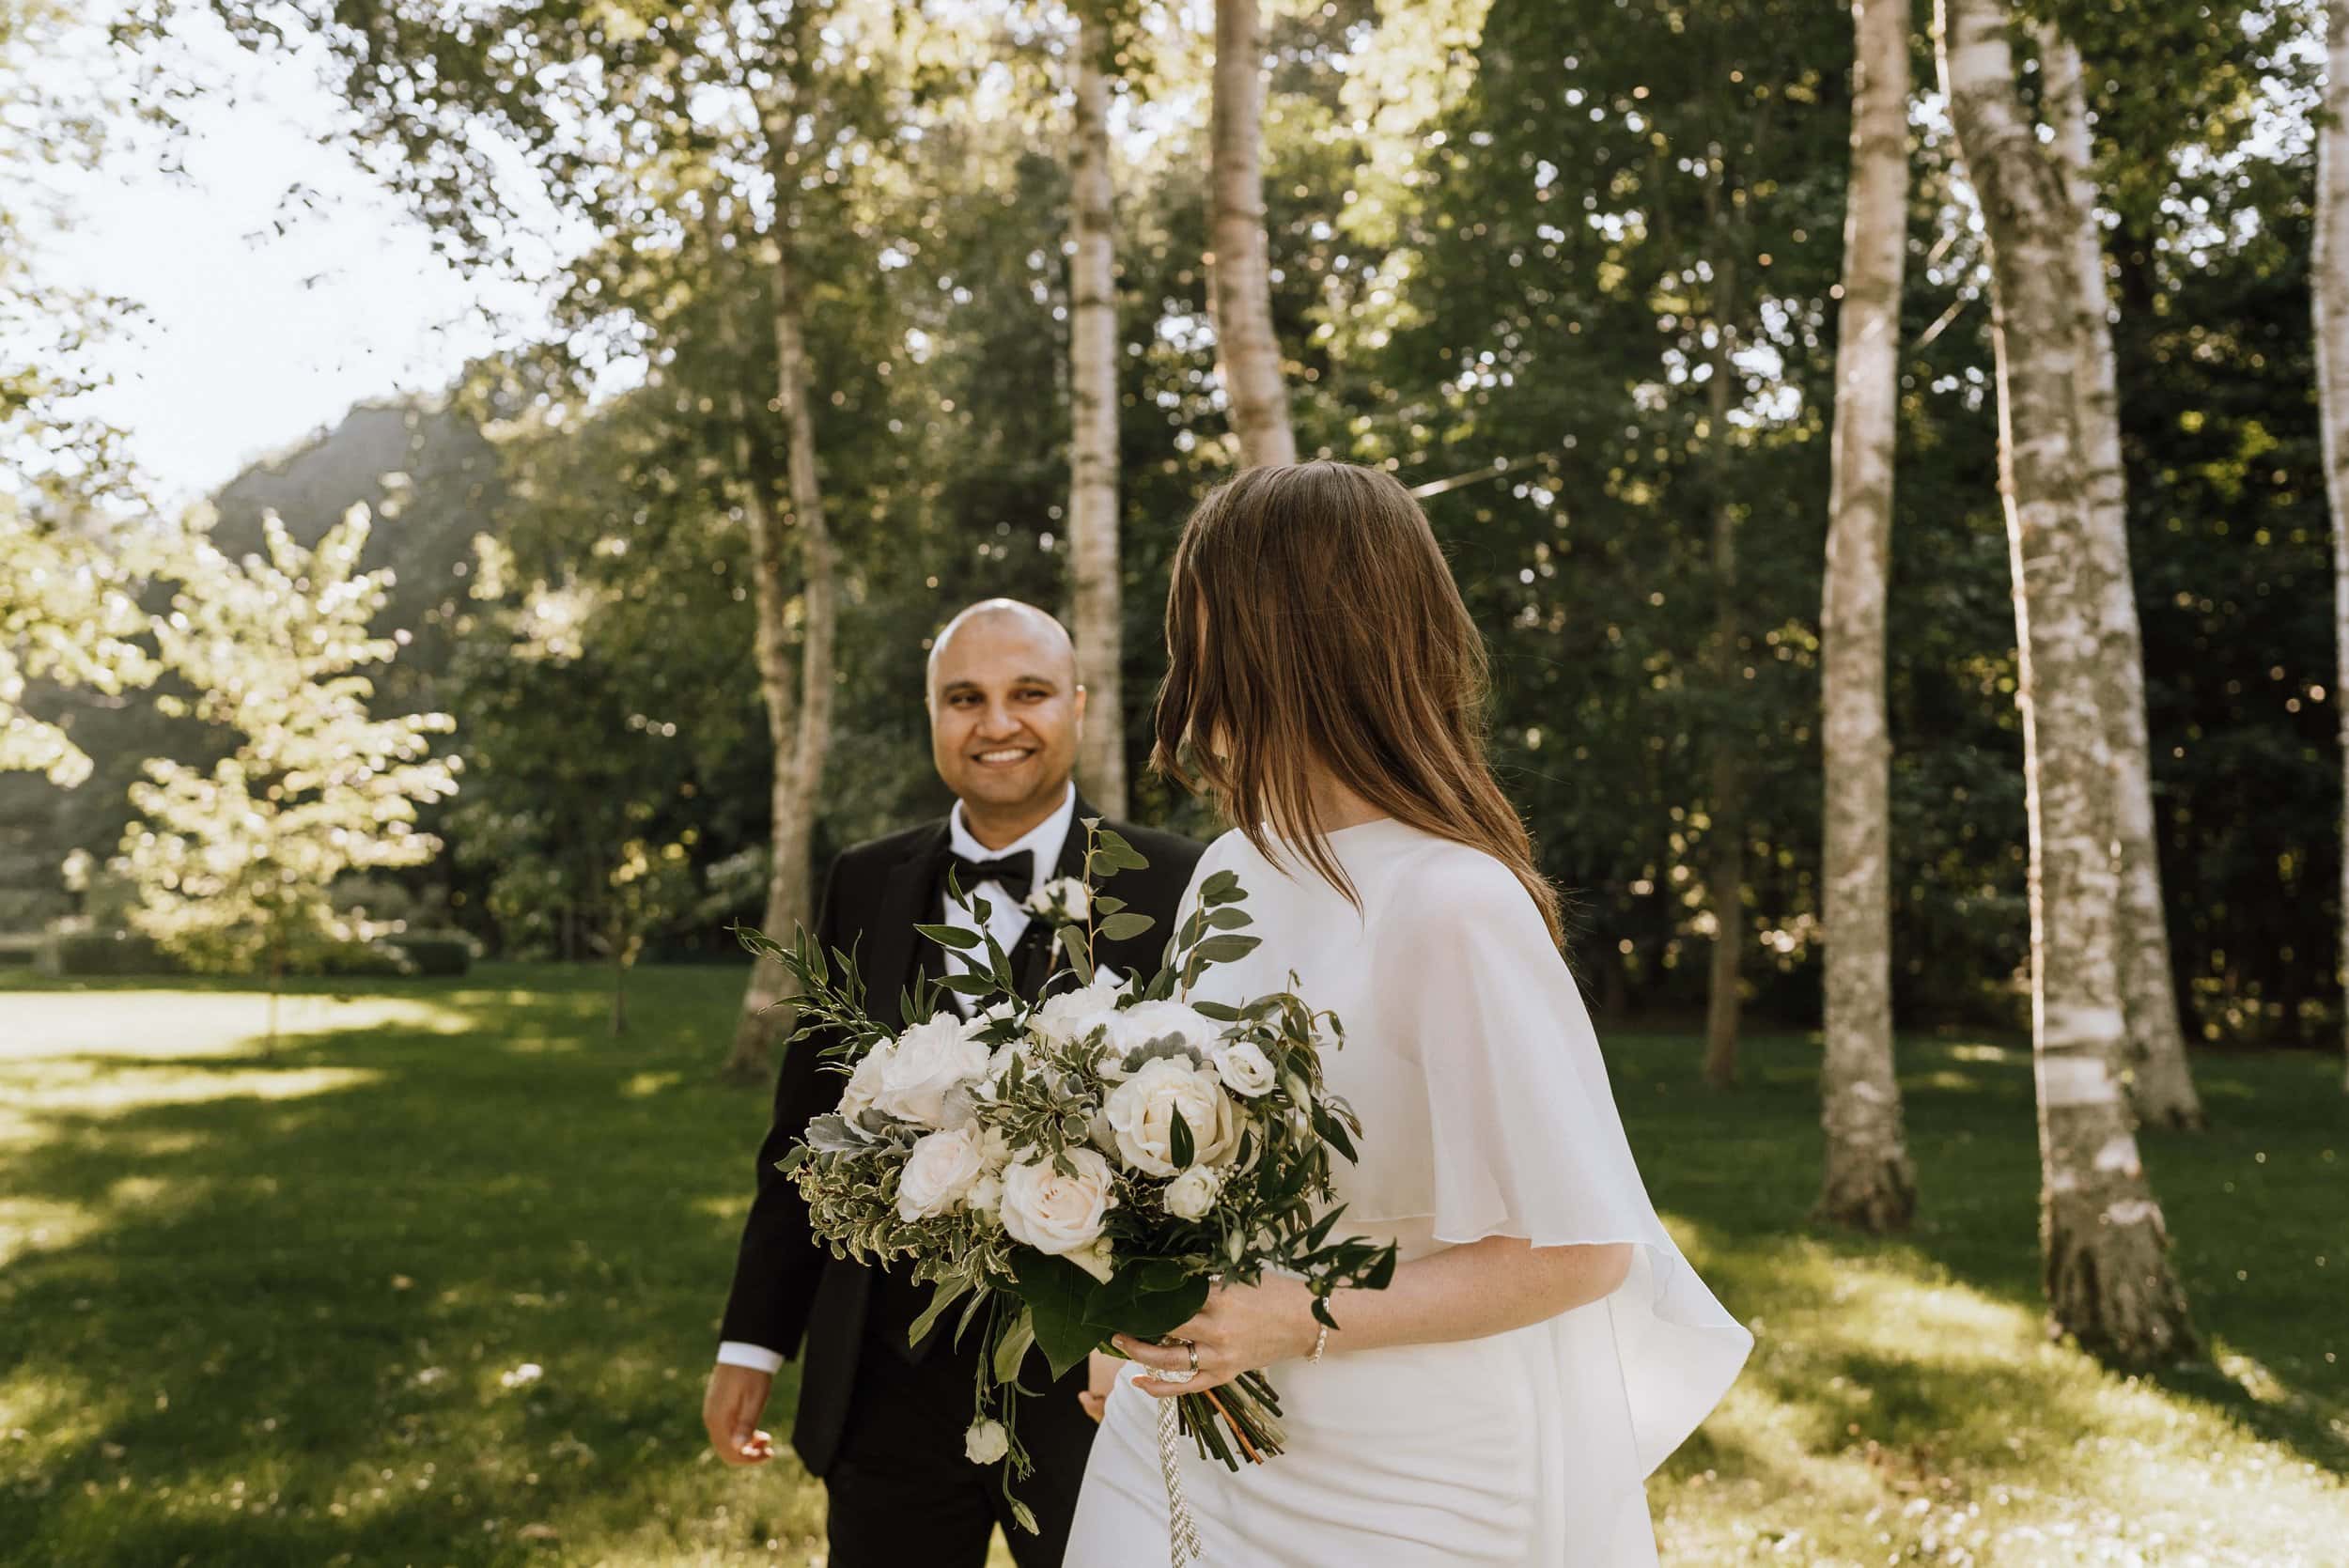 Prince Edward Island Wedding Photography - Michaela Bell Photography